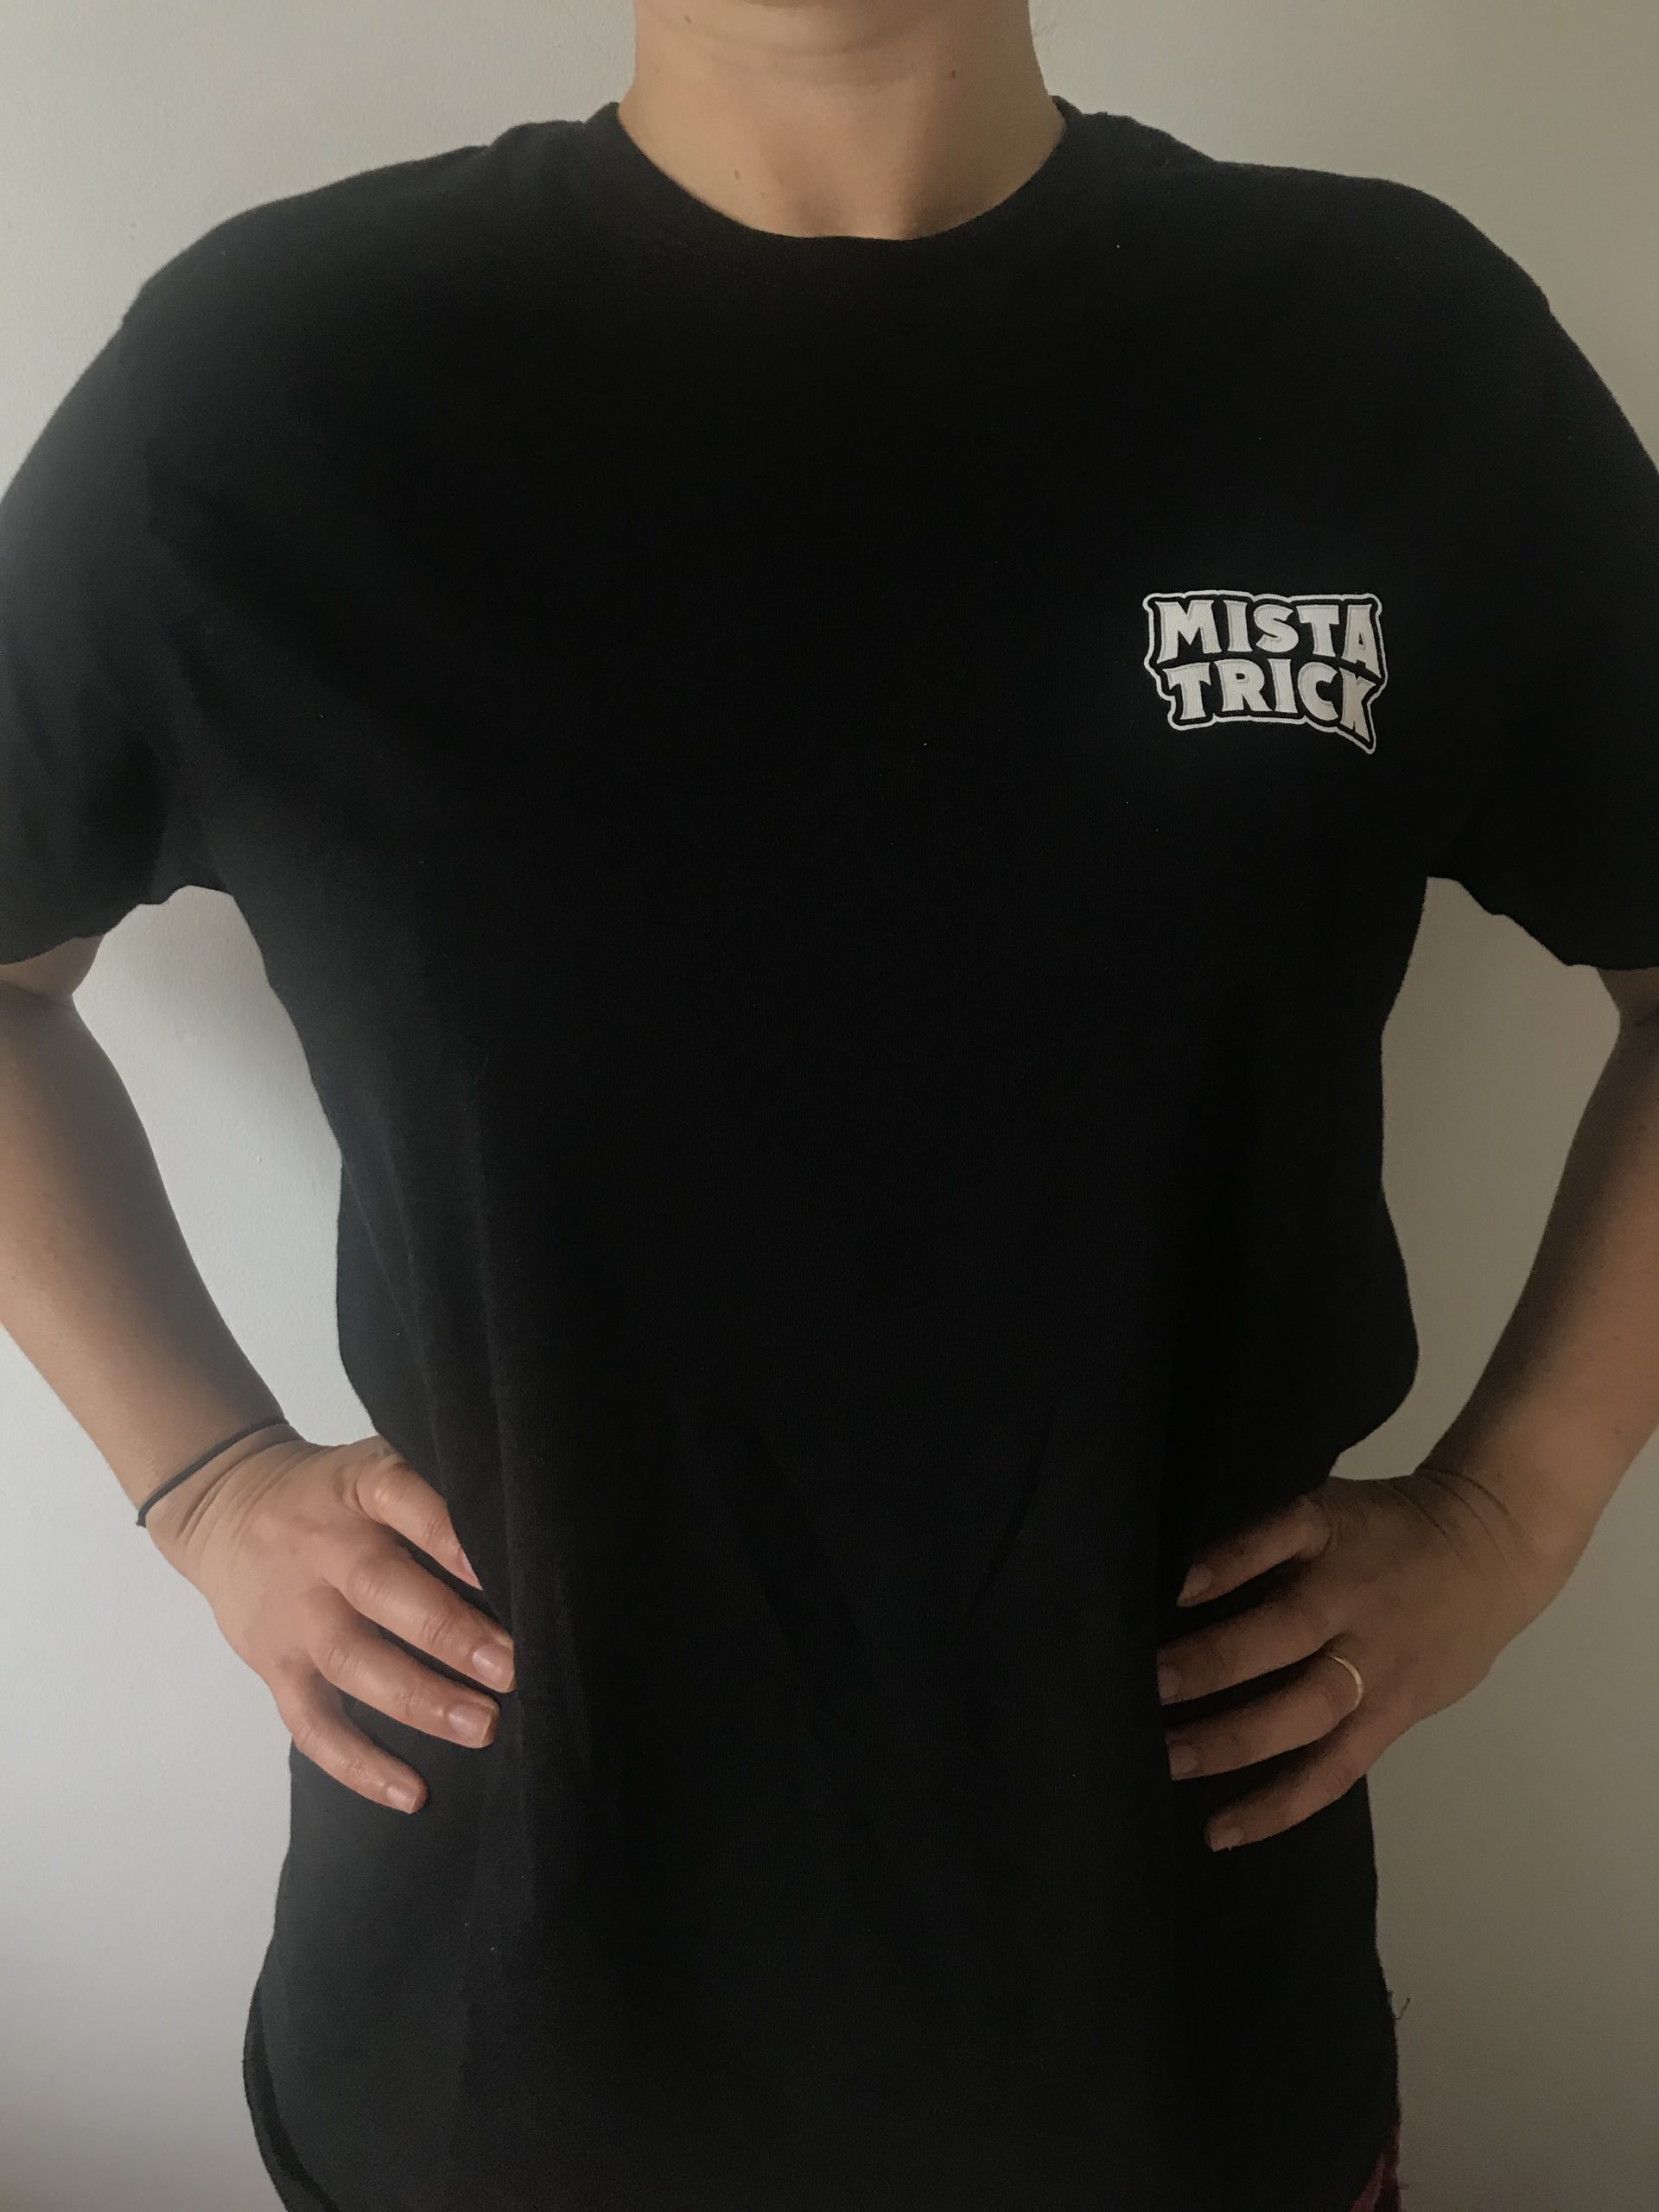 Mista Trick T-Shirt Size: XL